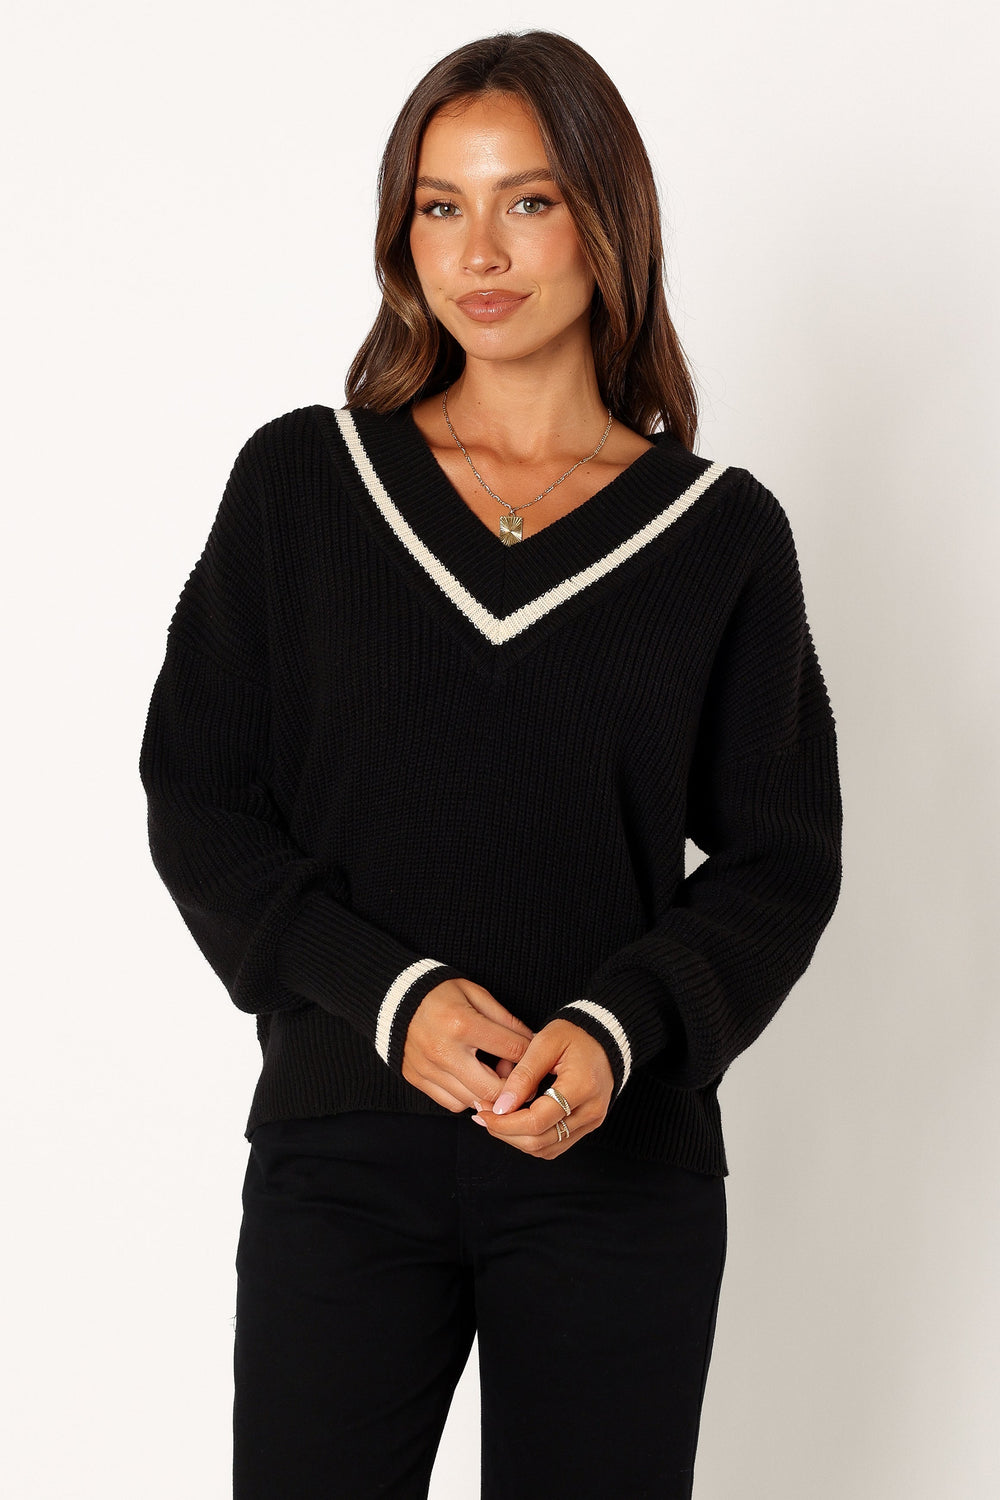 Dominique Contrast Vneck Knit Sweater - Black/Cream - Petal & Pup USA